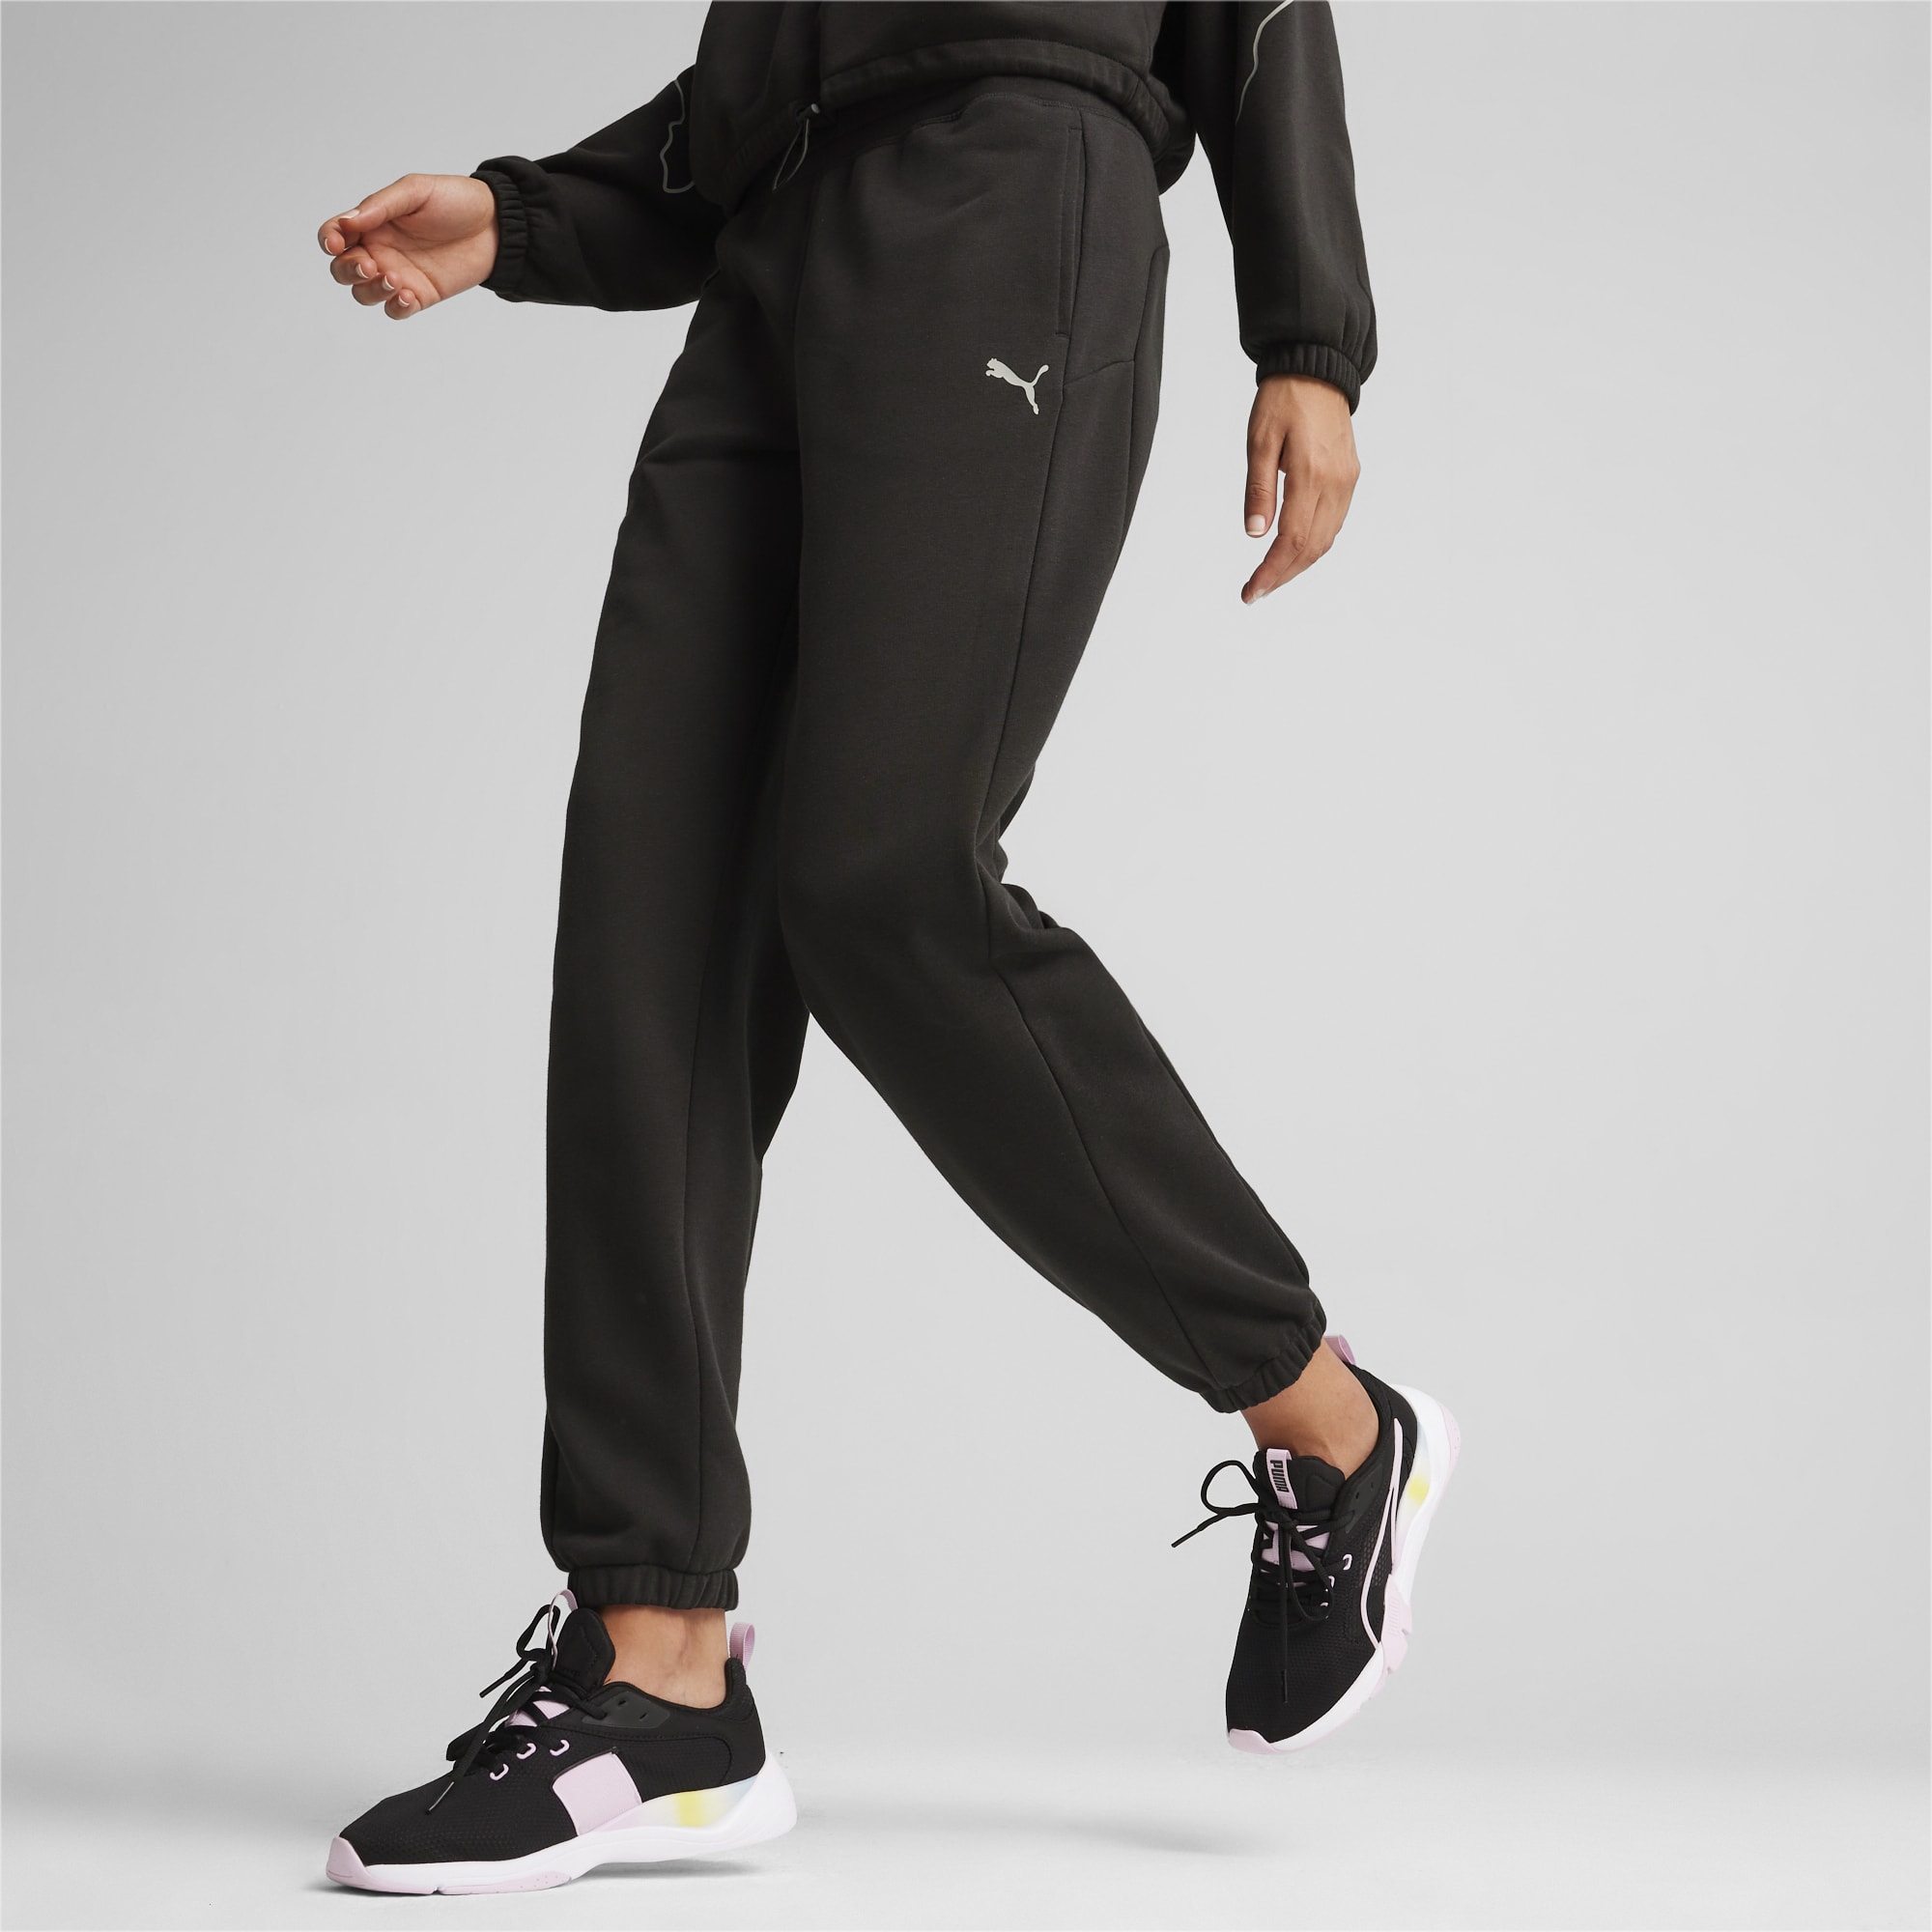 Puma Women's Regular Track Pants (53965201_Black 